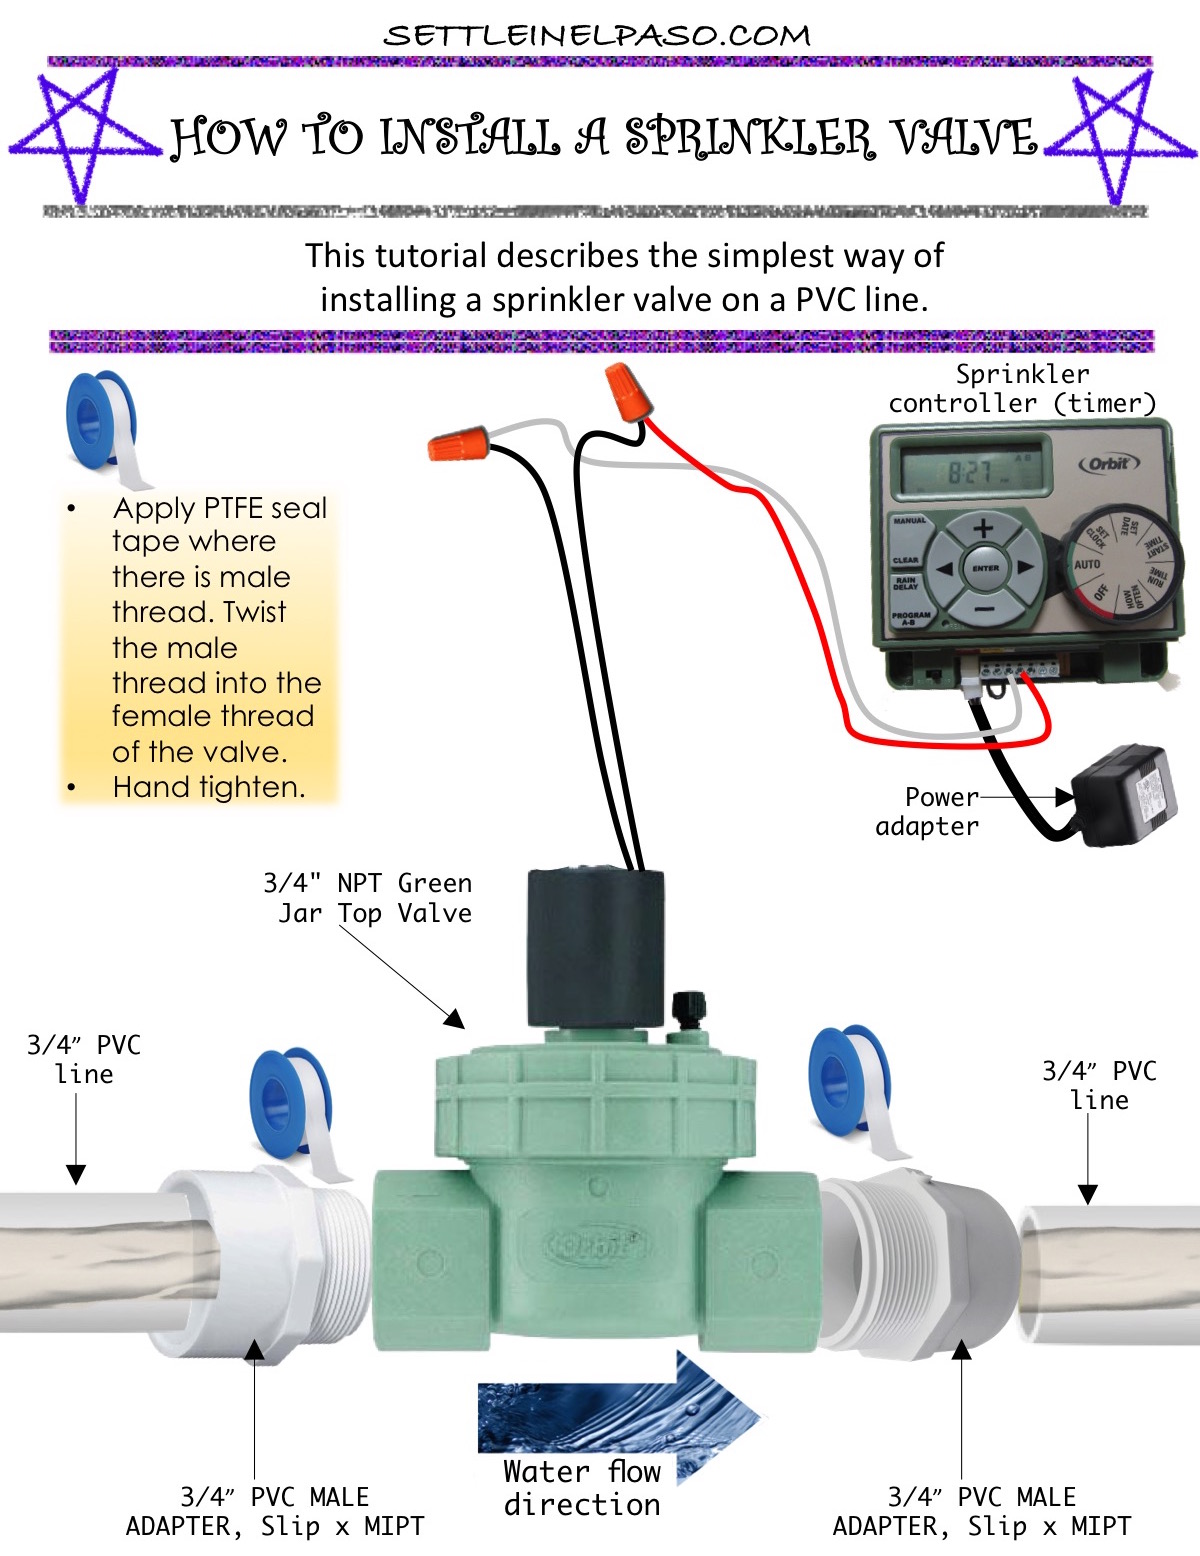 How to install a regular sprinkler valve.